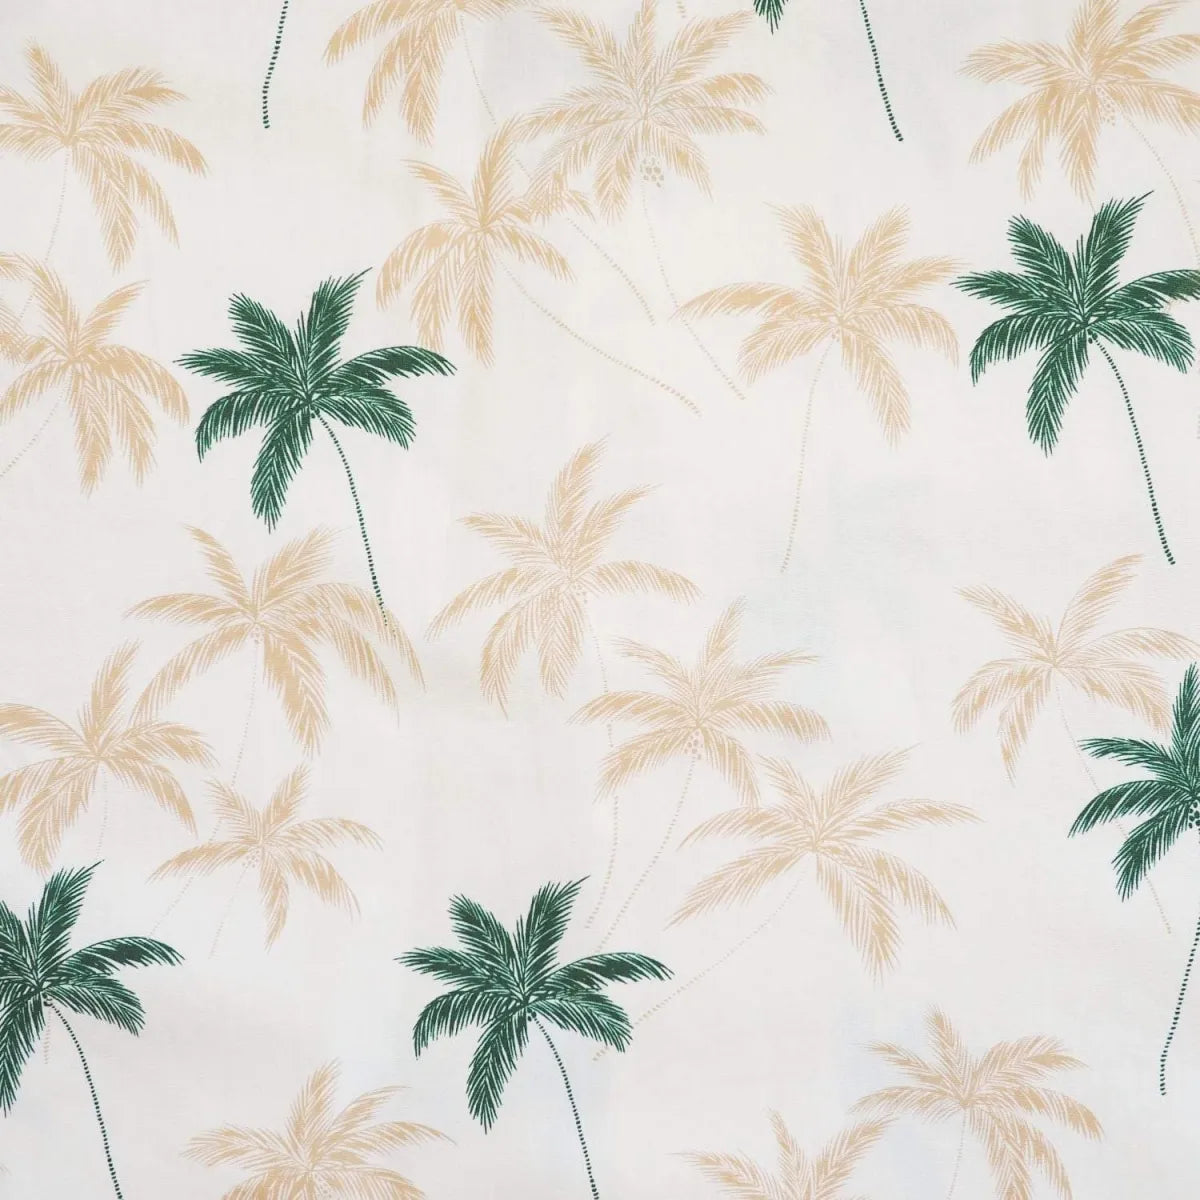 Palm beach cream hawaiian cotton shirt